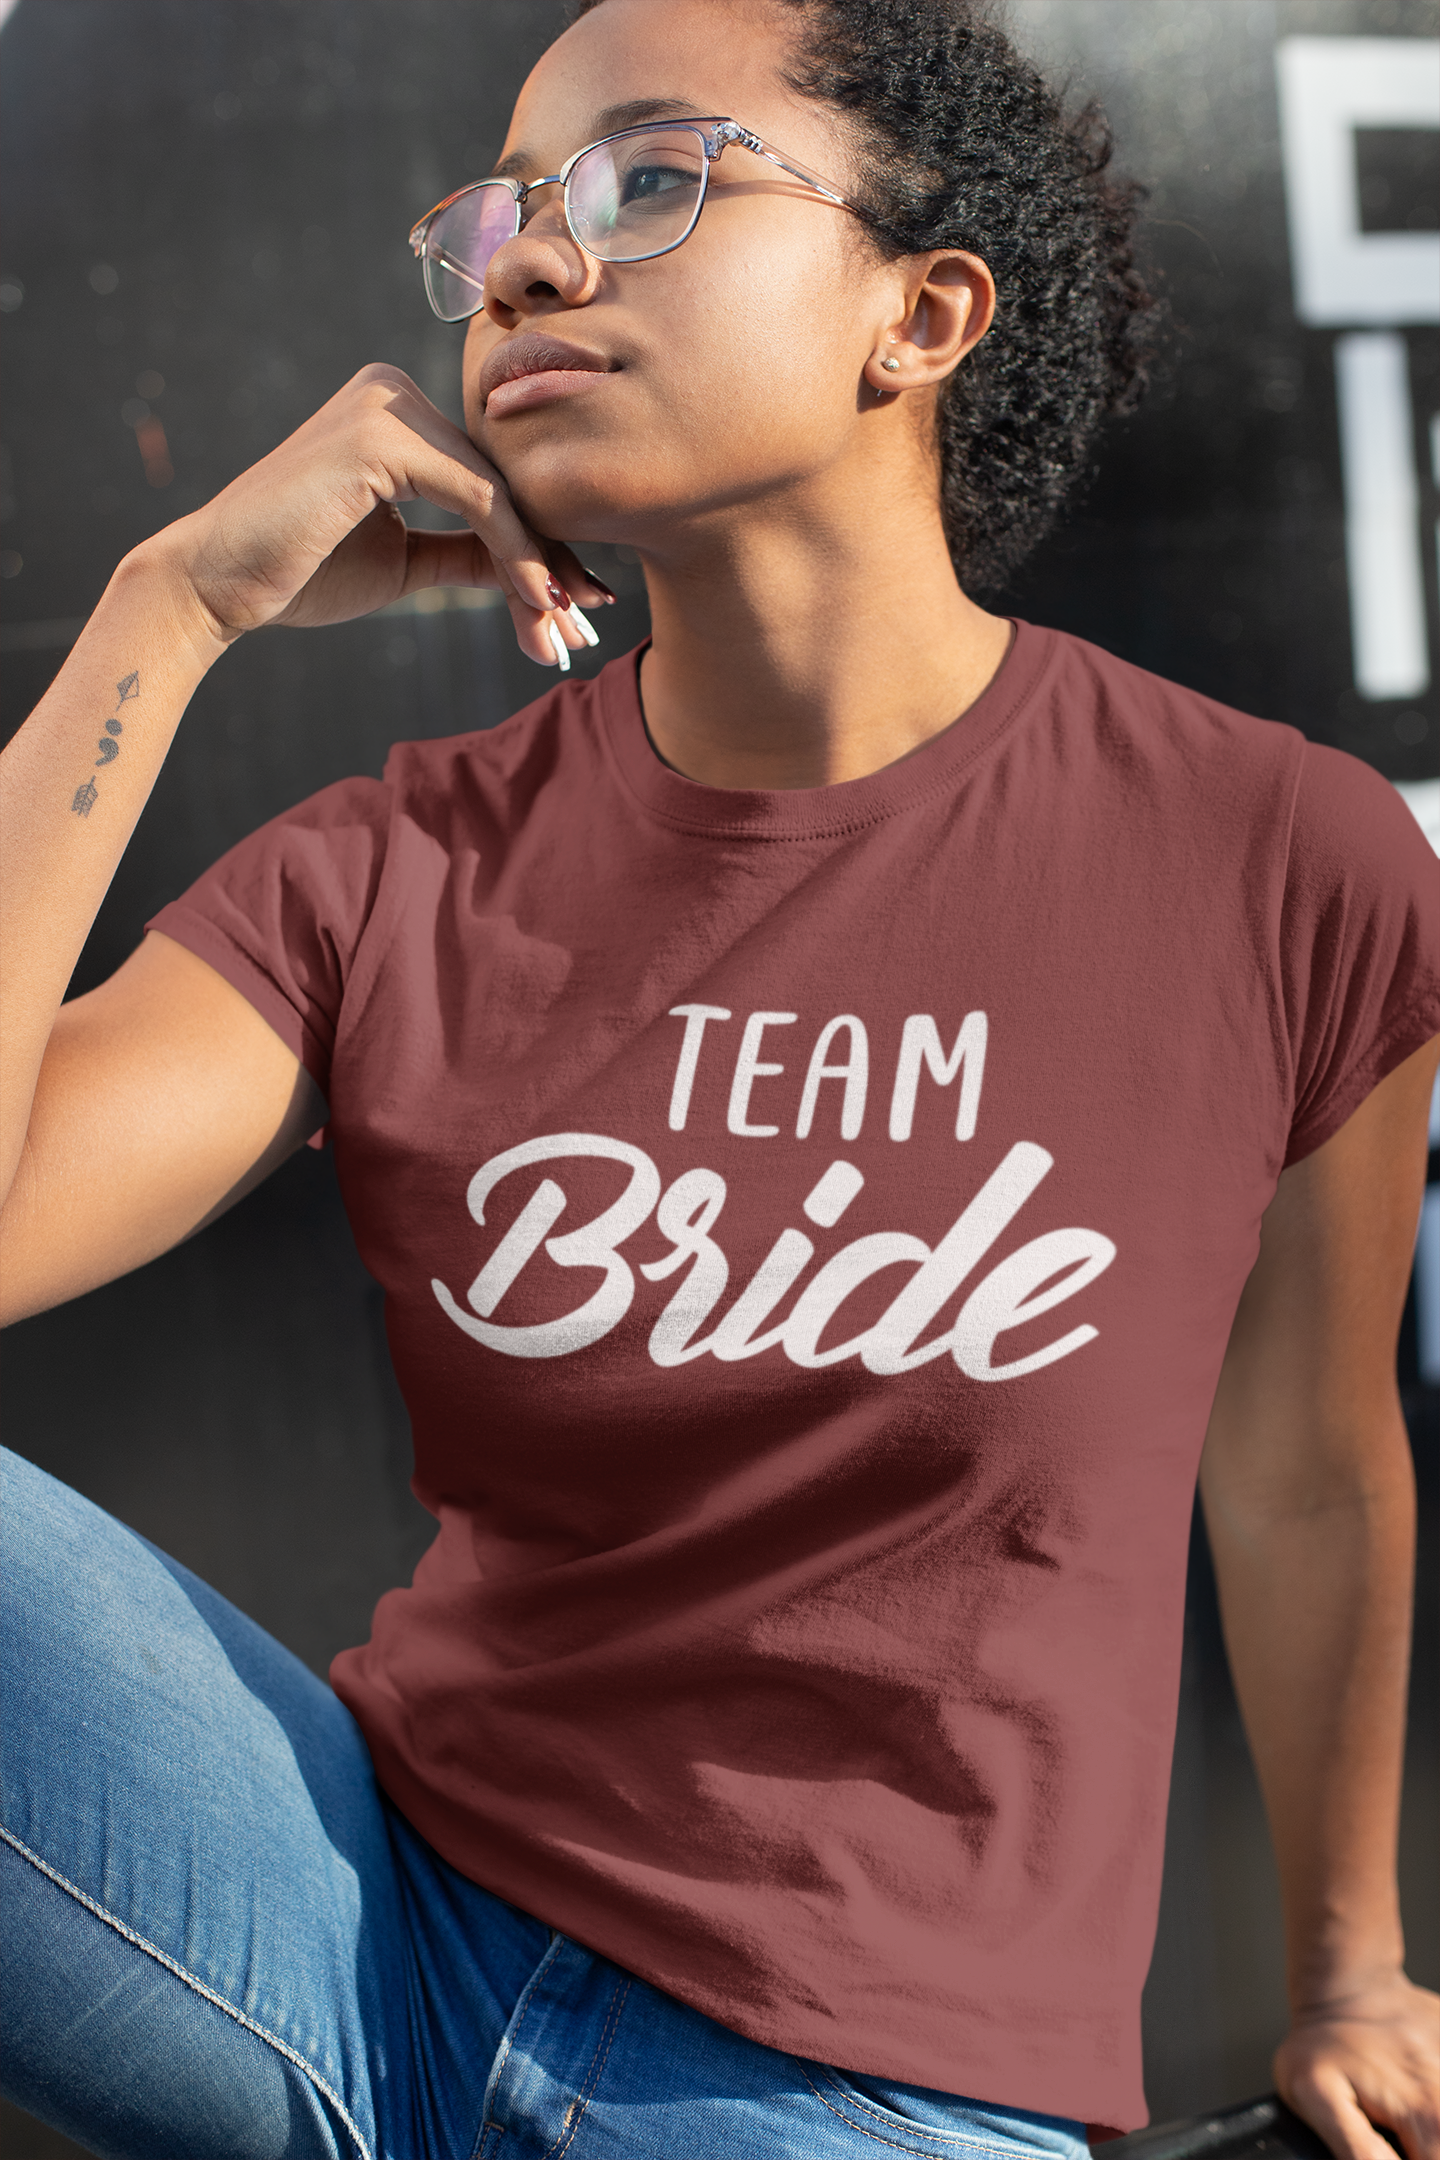 Team Bride, Trendy Bride Shirt, Bachelorette Party Shirts, Wedding Party Shirts, Womens Shirt